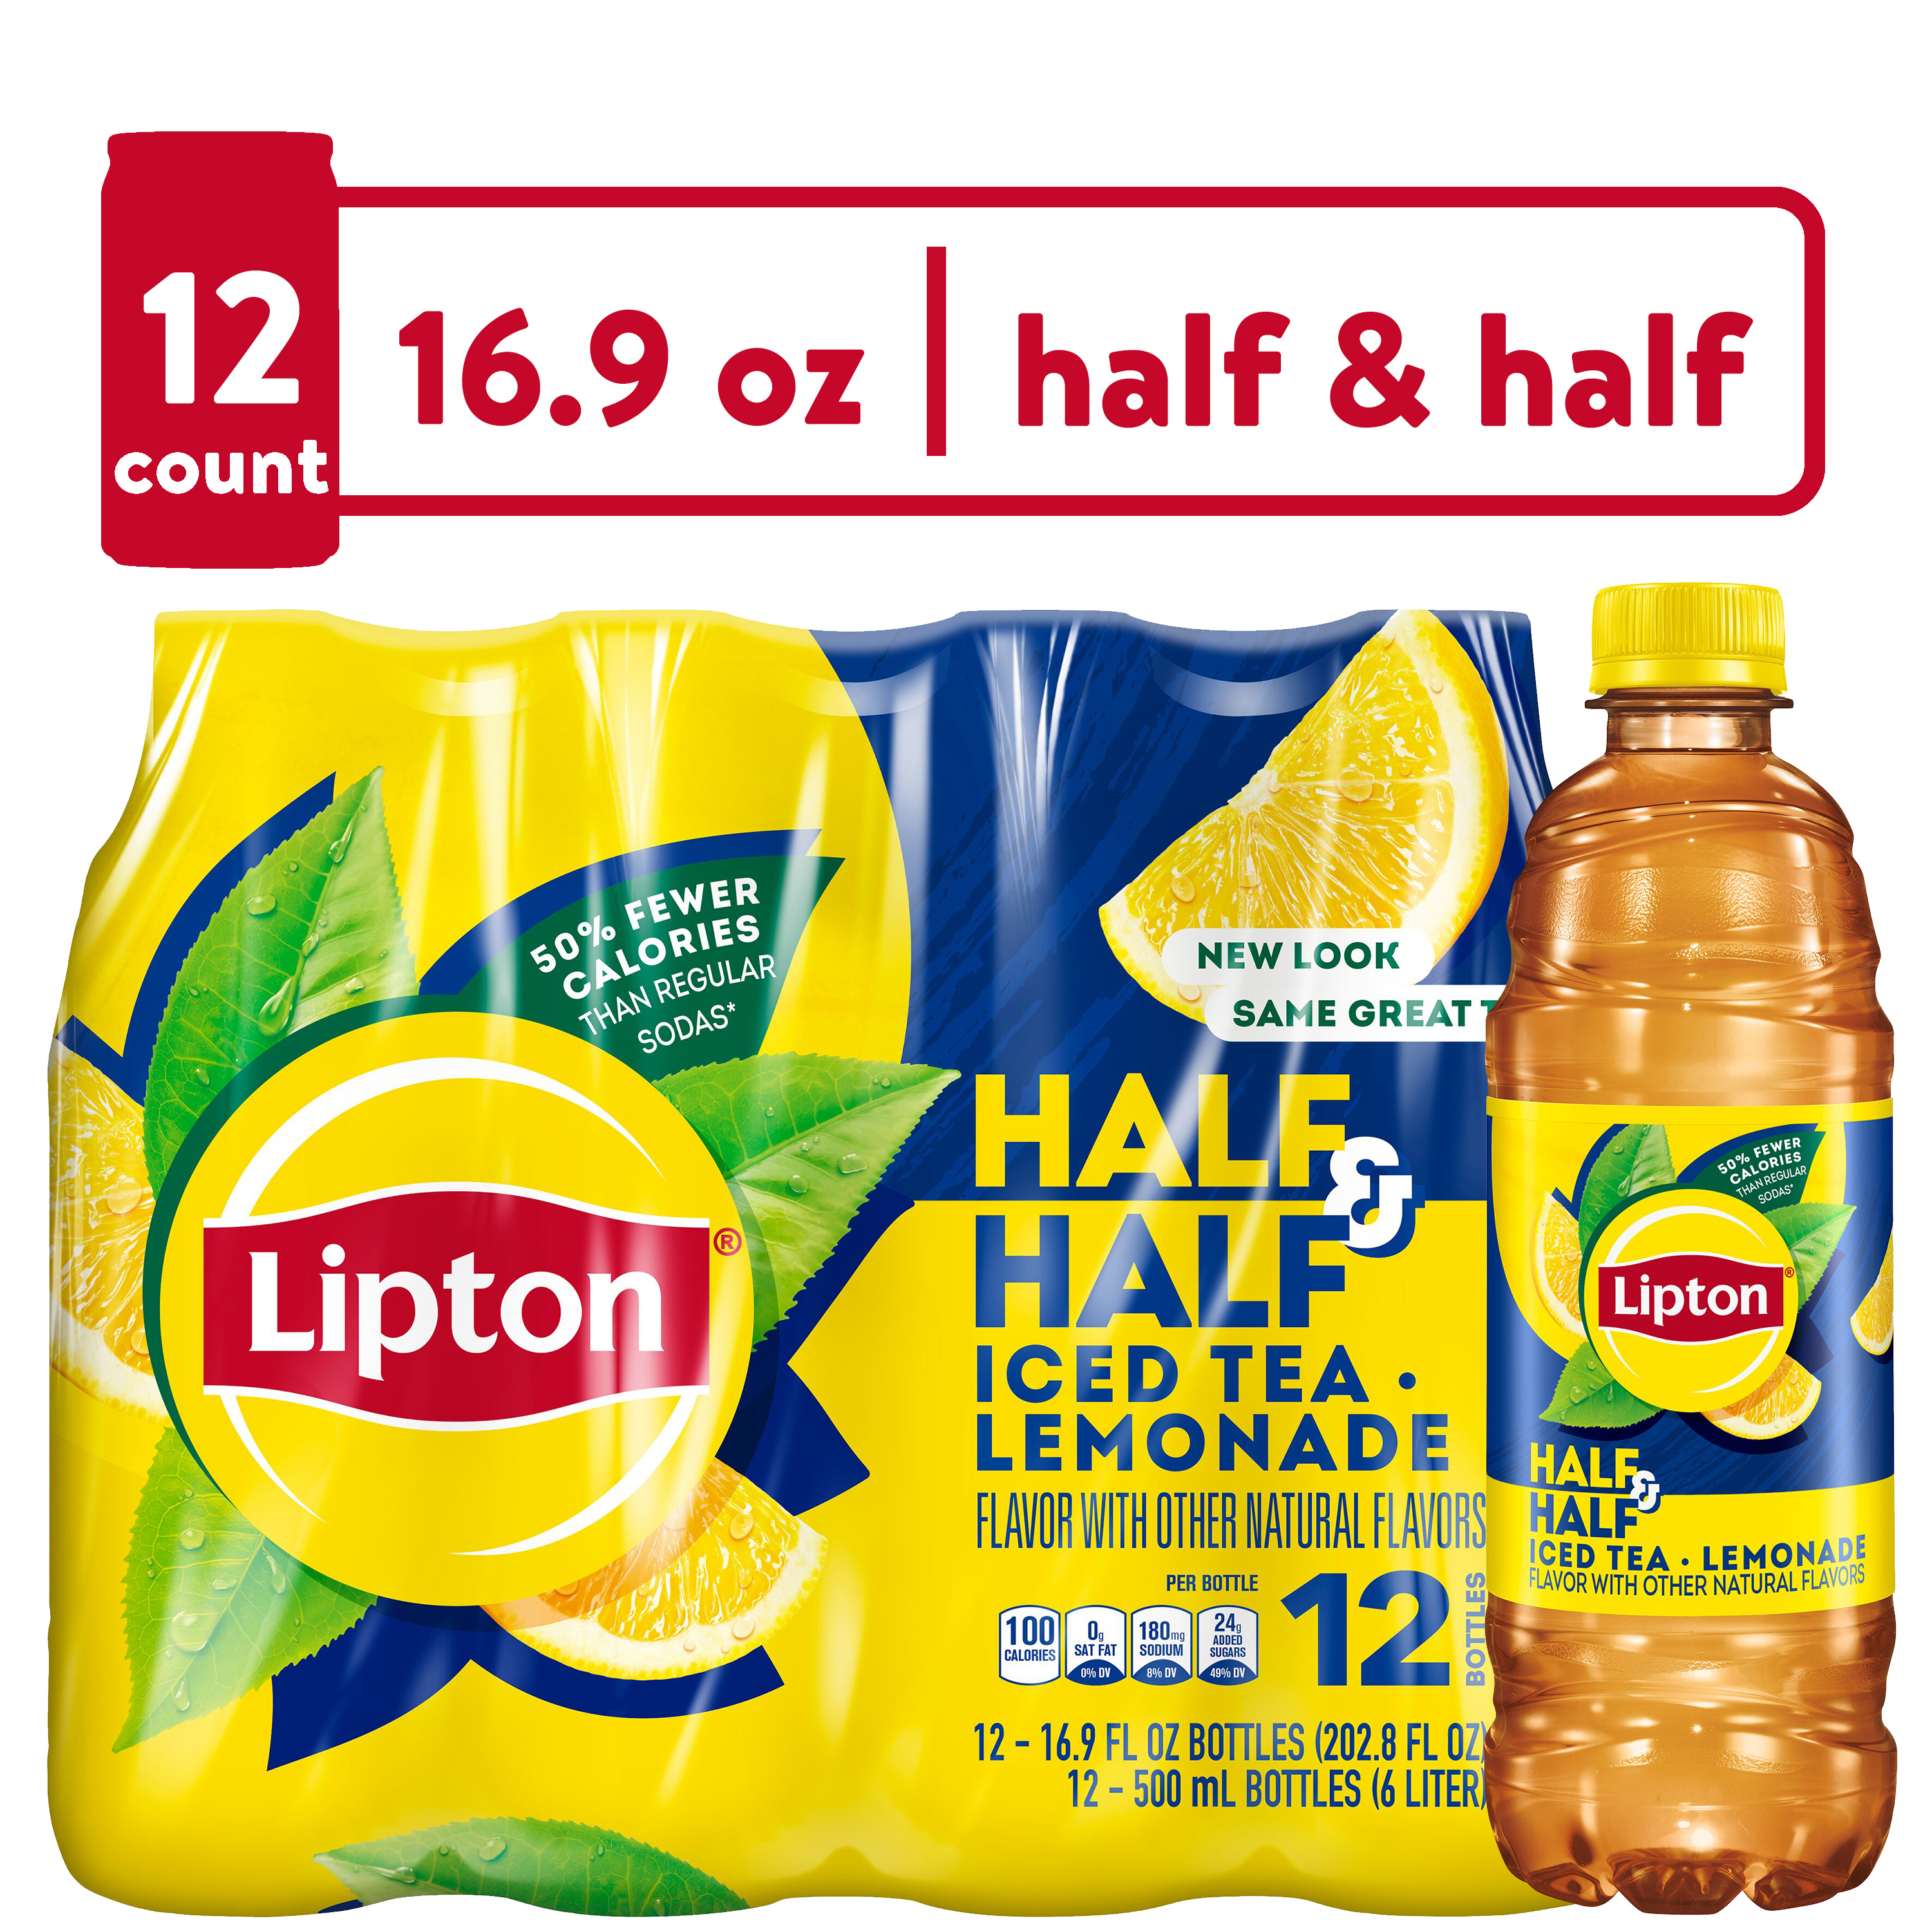 Lipton Half & Half Lemonade Iced Tea, 16.9 fl oz, 12 Pack Bottles - image 1 of 6